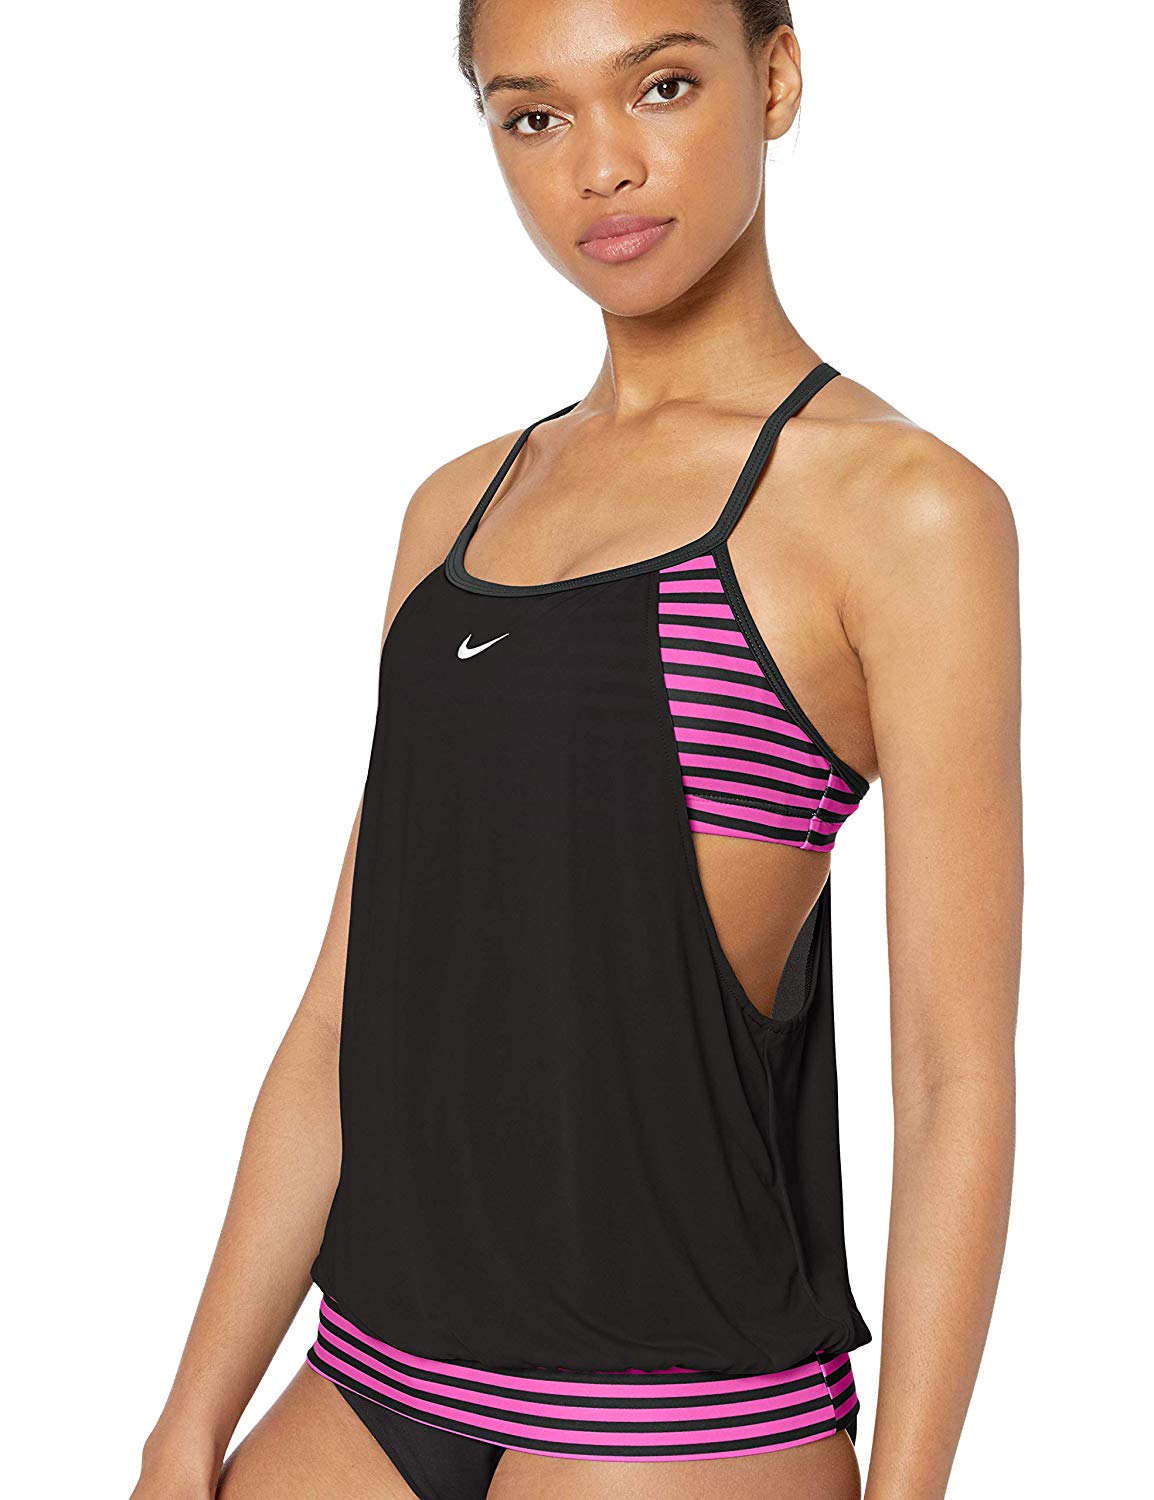 Nike Swim Women's Layered Sport Tankini Swimsuit Set, Fuchsia, Black